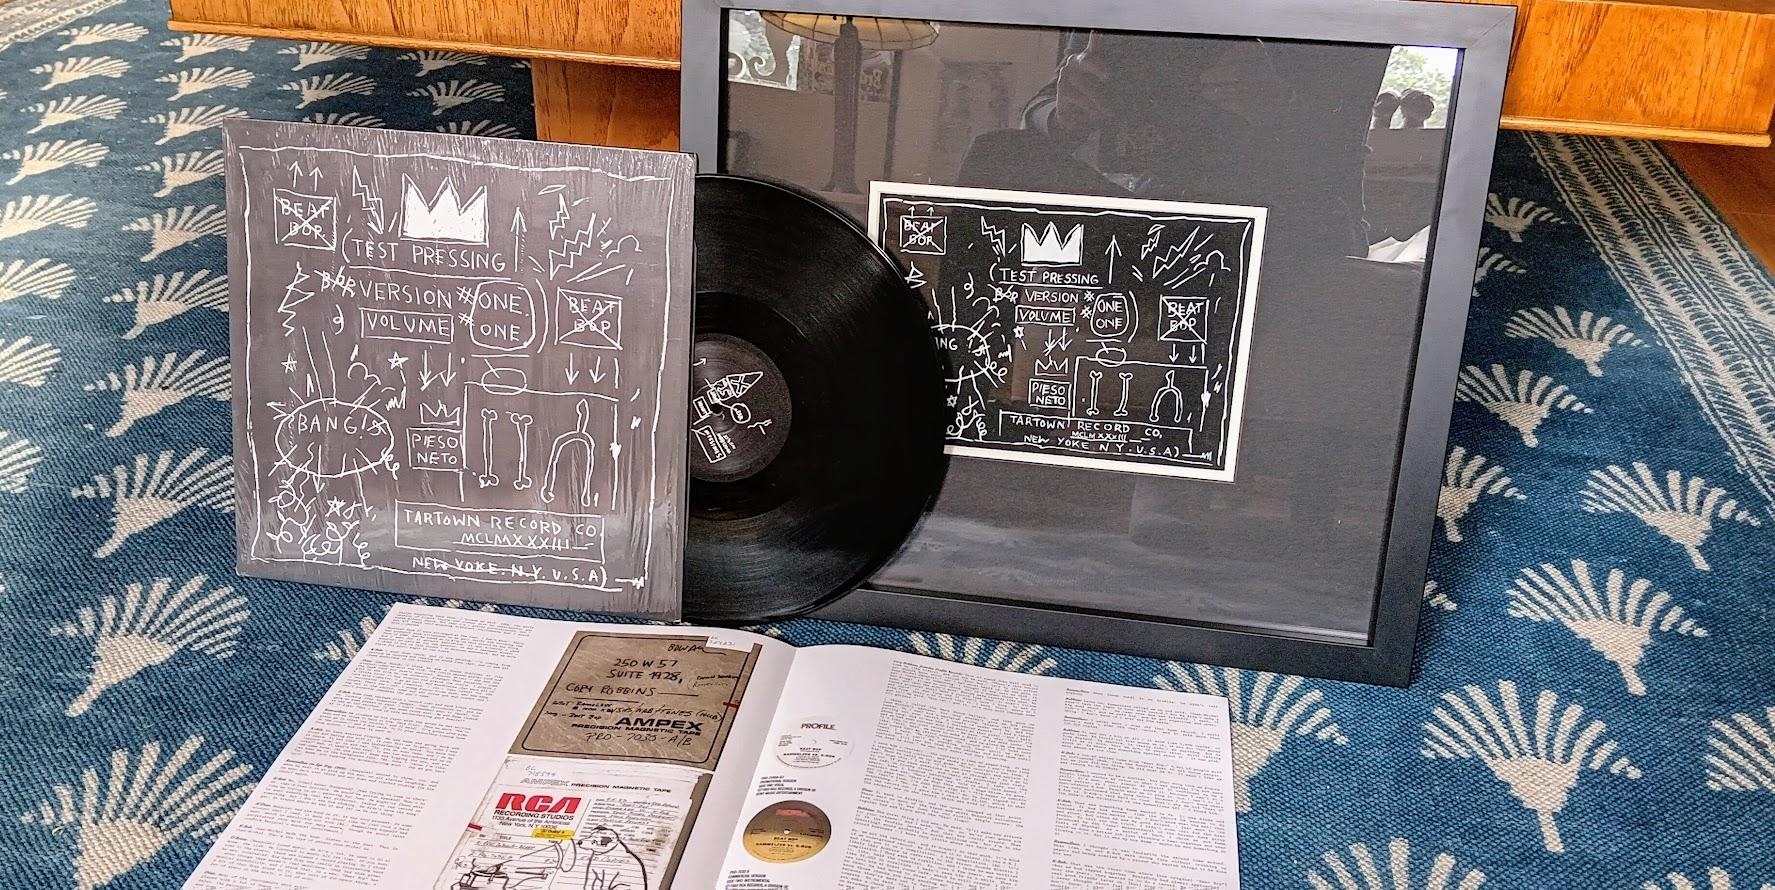 Rammelzee & Jean Michel Basquiat "Beat Bop", Mixed Media w/ 12' Vinyl Record  - Mixed Media Art by after Jean-Michel Basquiat